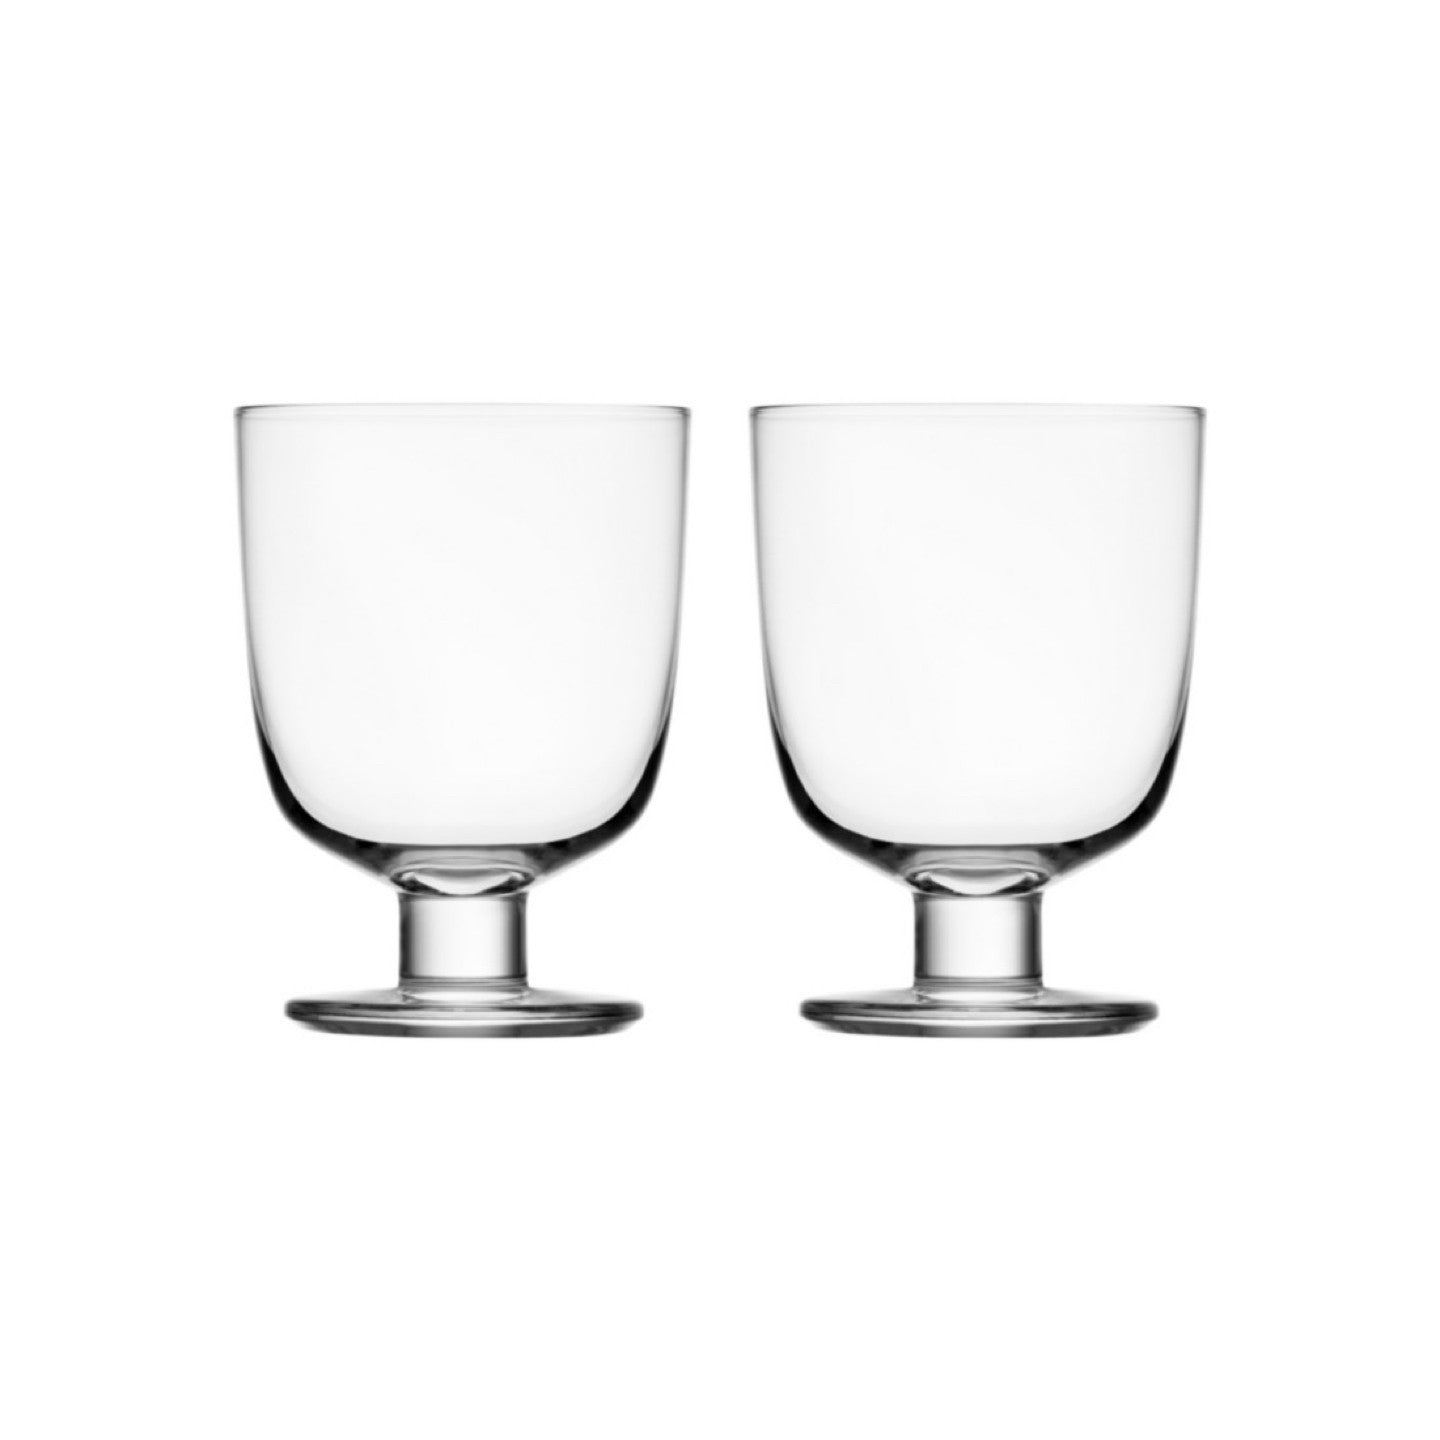 Lempi Set of 2 Glasses by Matti Klenell